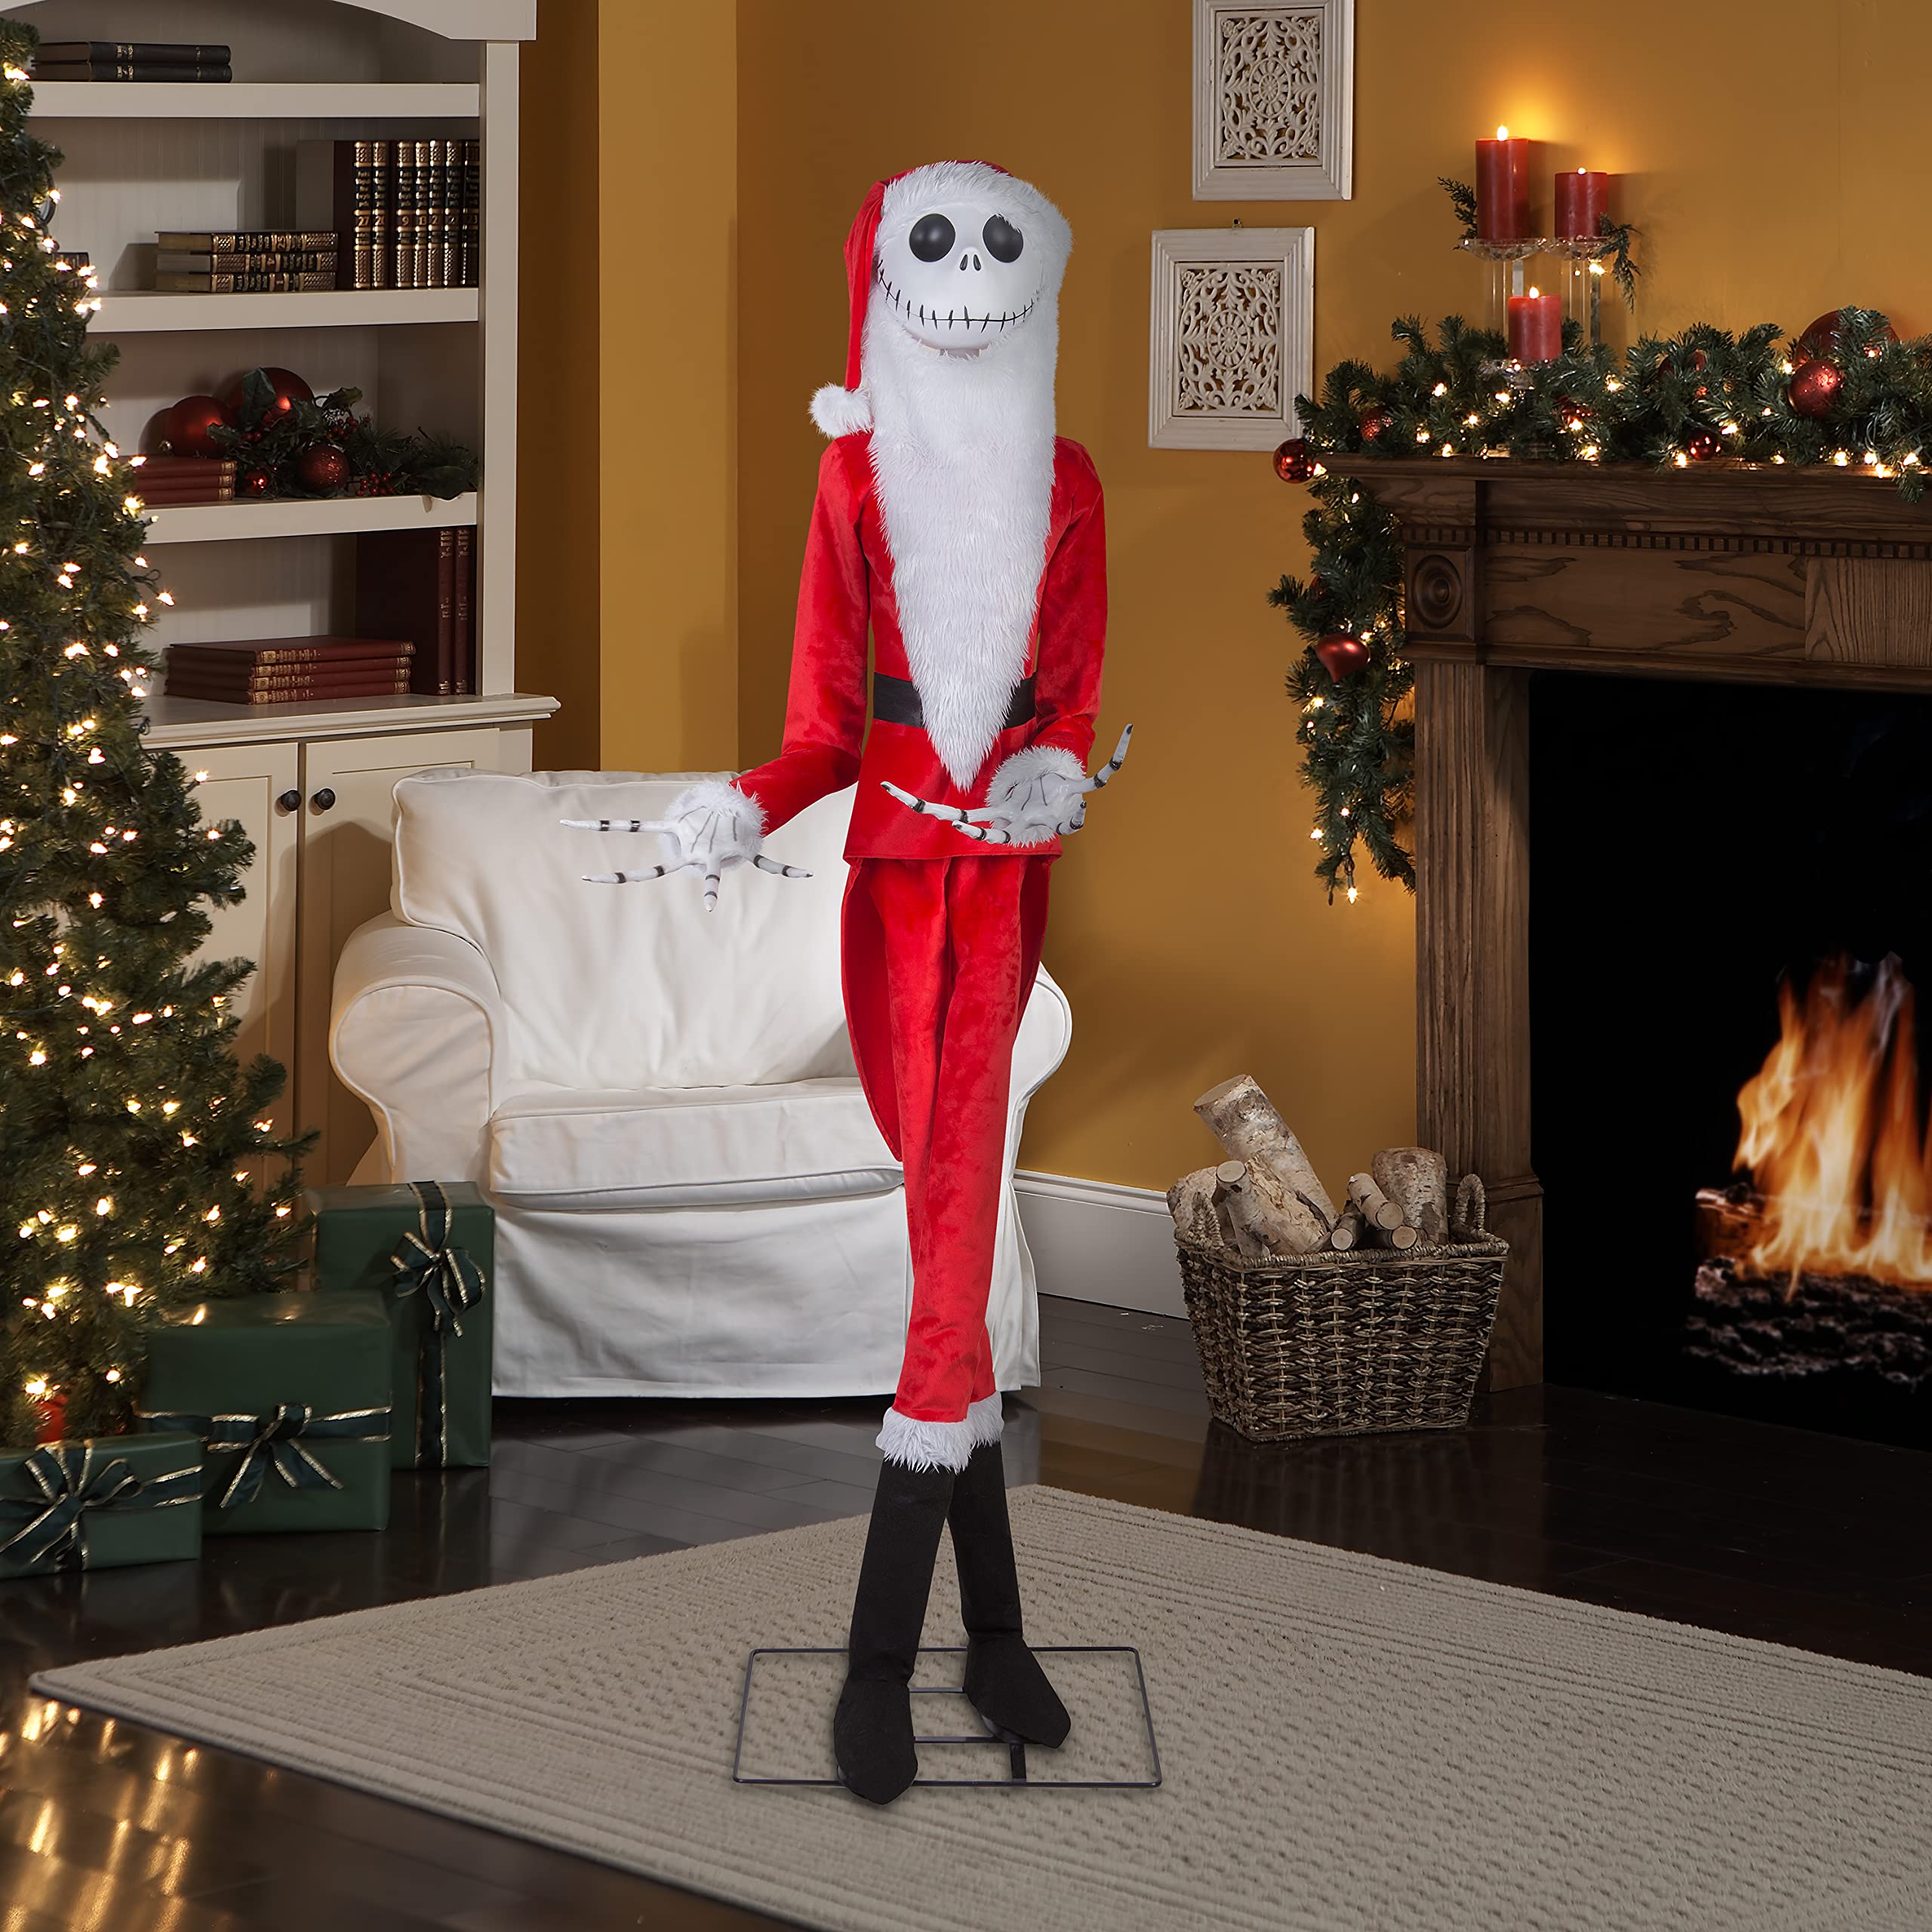 The Nightmare Before Christmas Life Size Animated Prop - Santa Jack Skellington